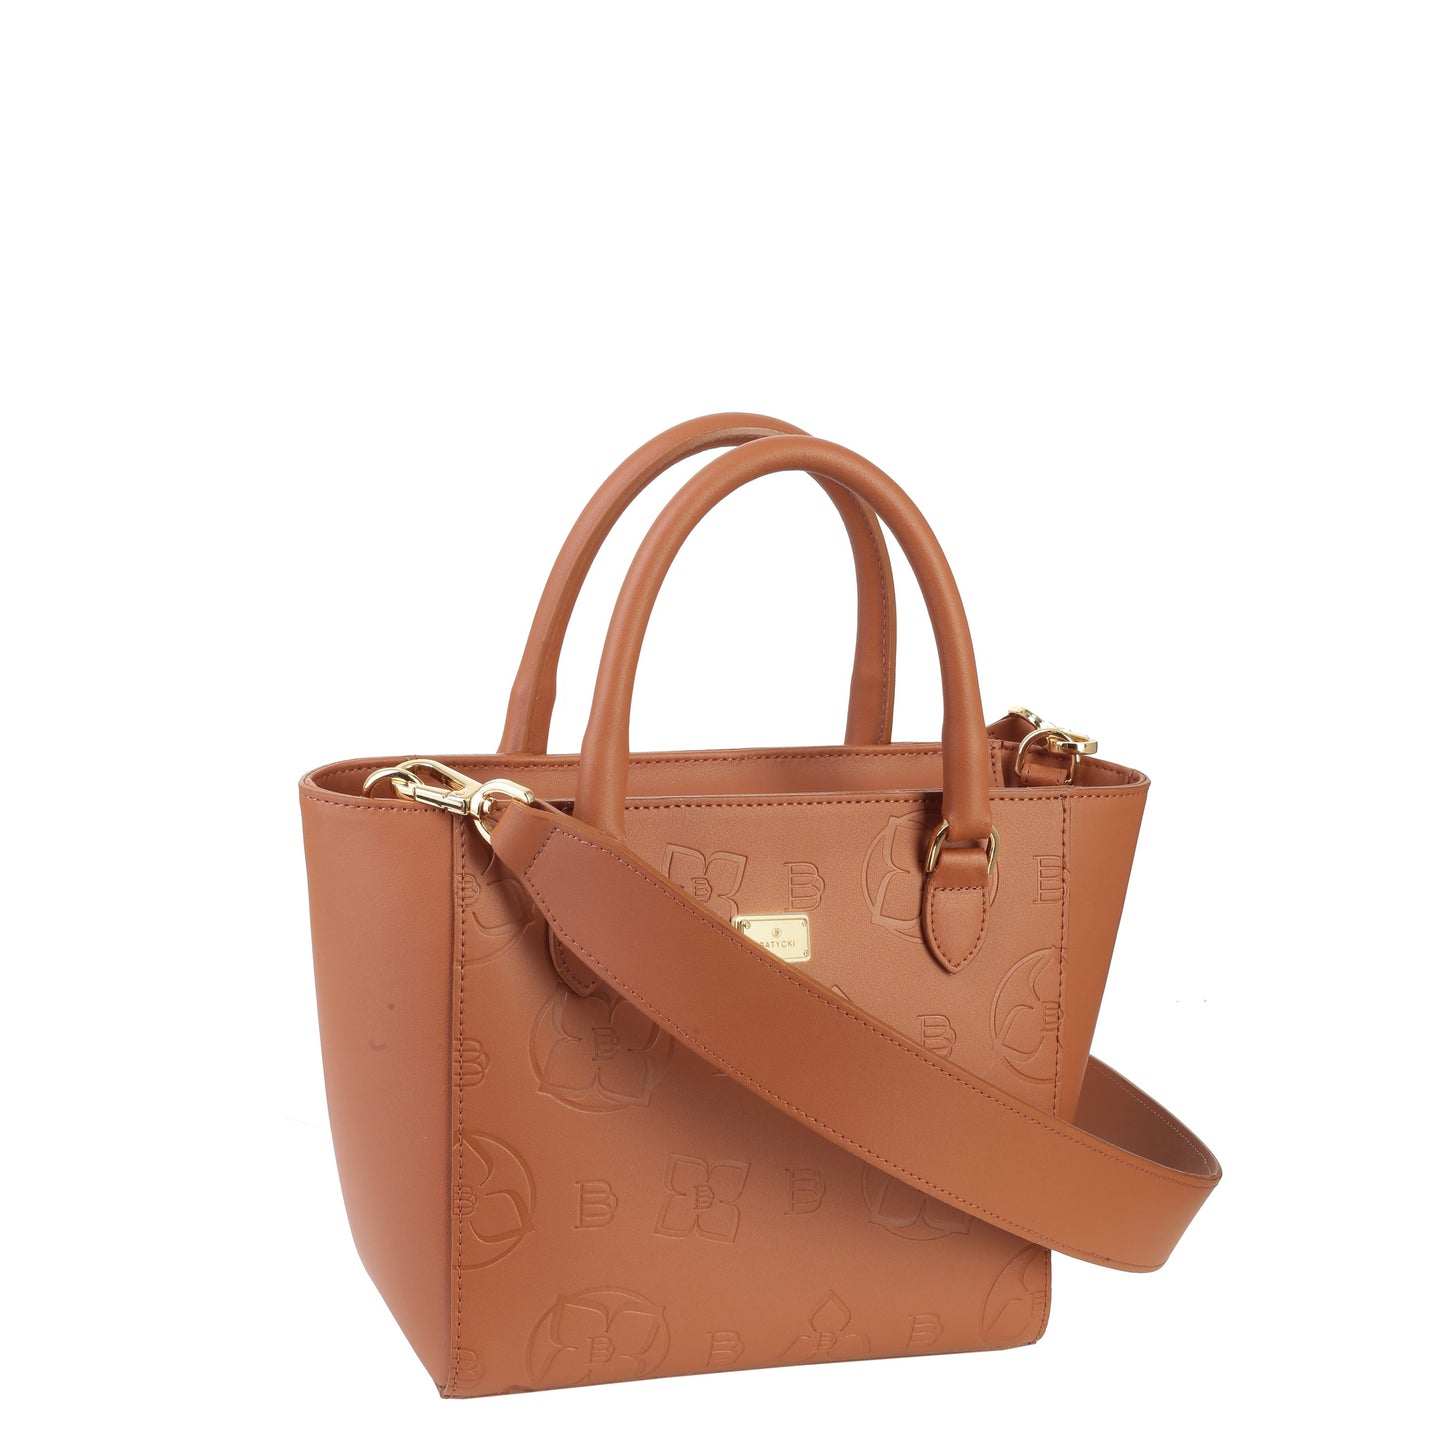 STAMPIA S NAPA COGNAC women's leather handbag